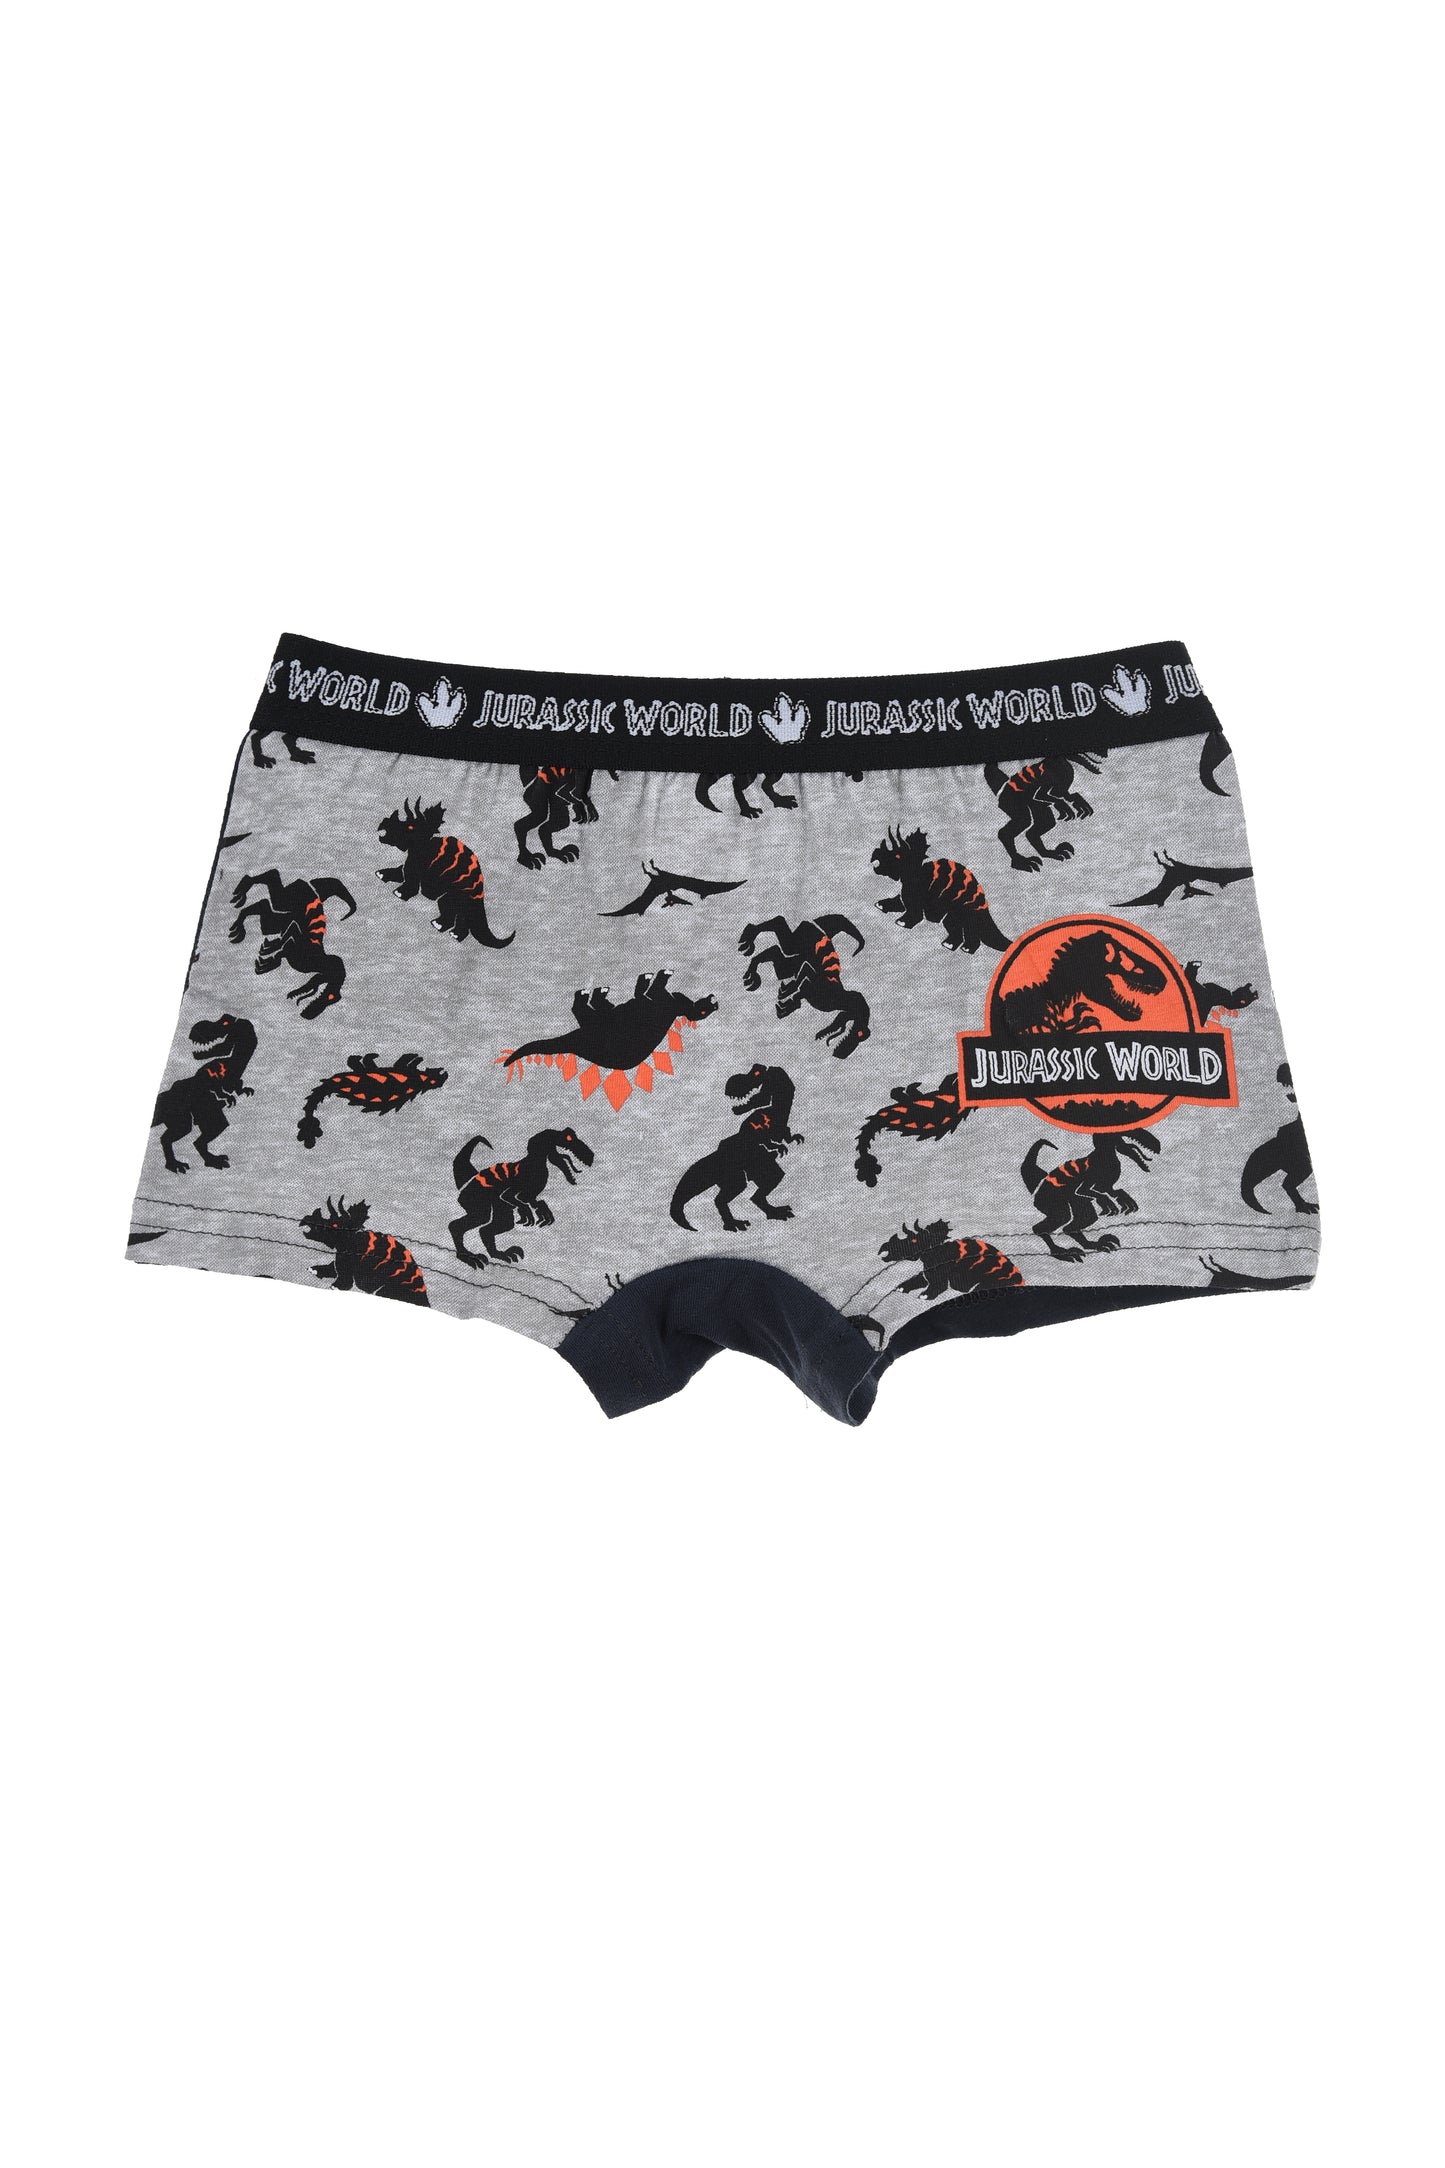 Jurassic World Organic Cotton Boys Boxer Shorts 2Pk Khaki